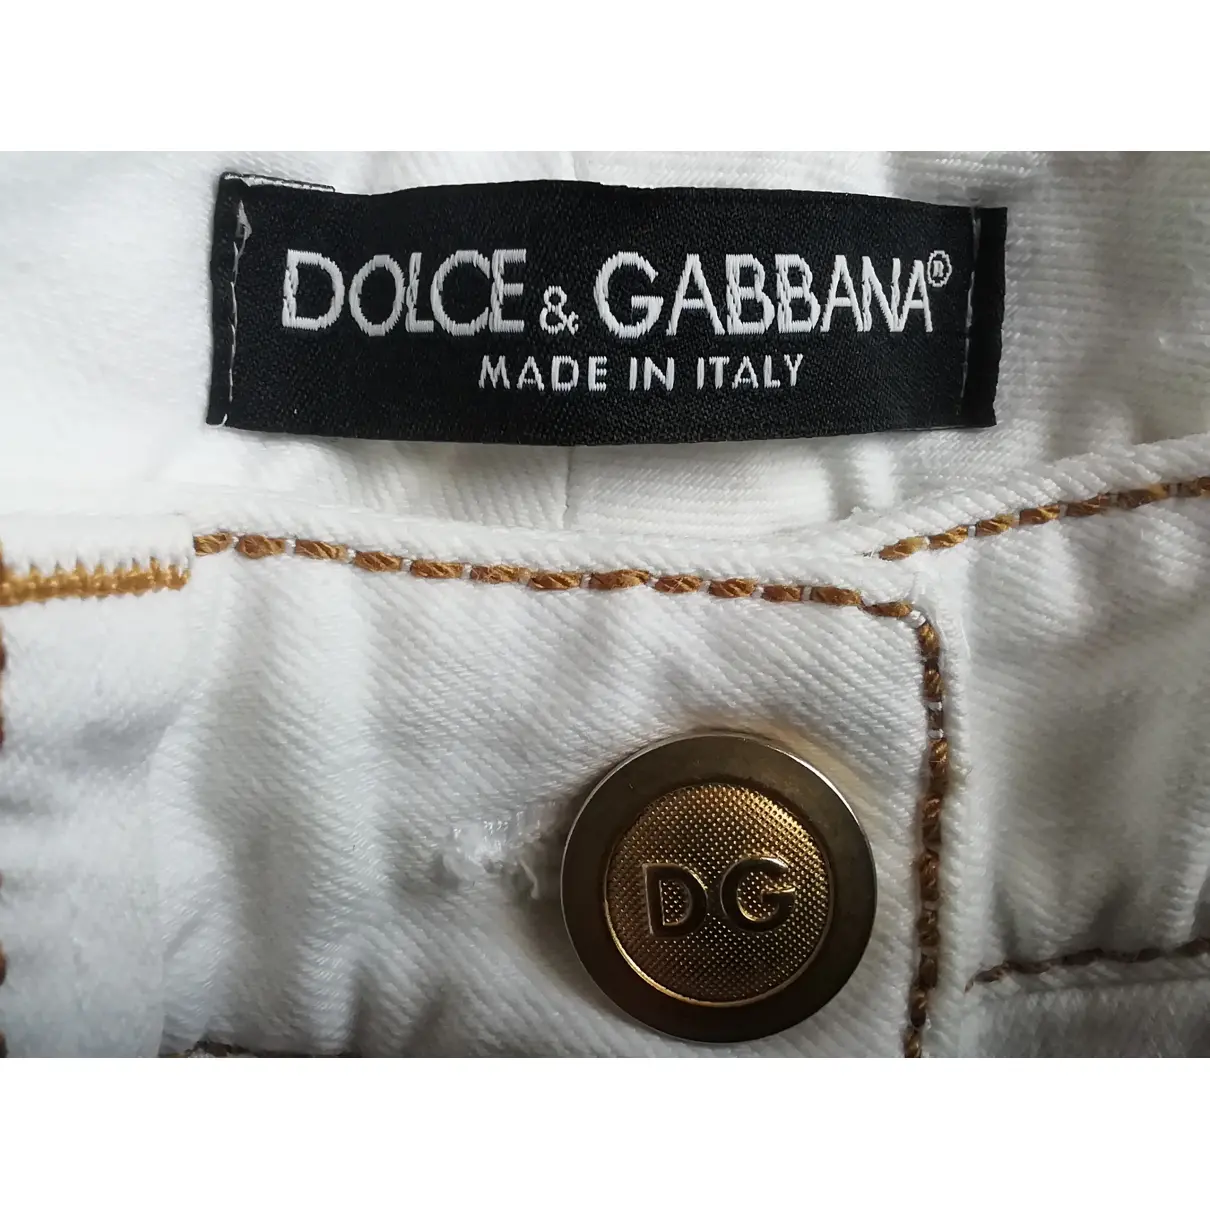 Straight jeans Dolce & Gabbana